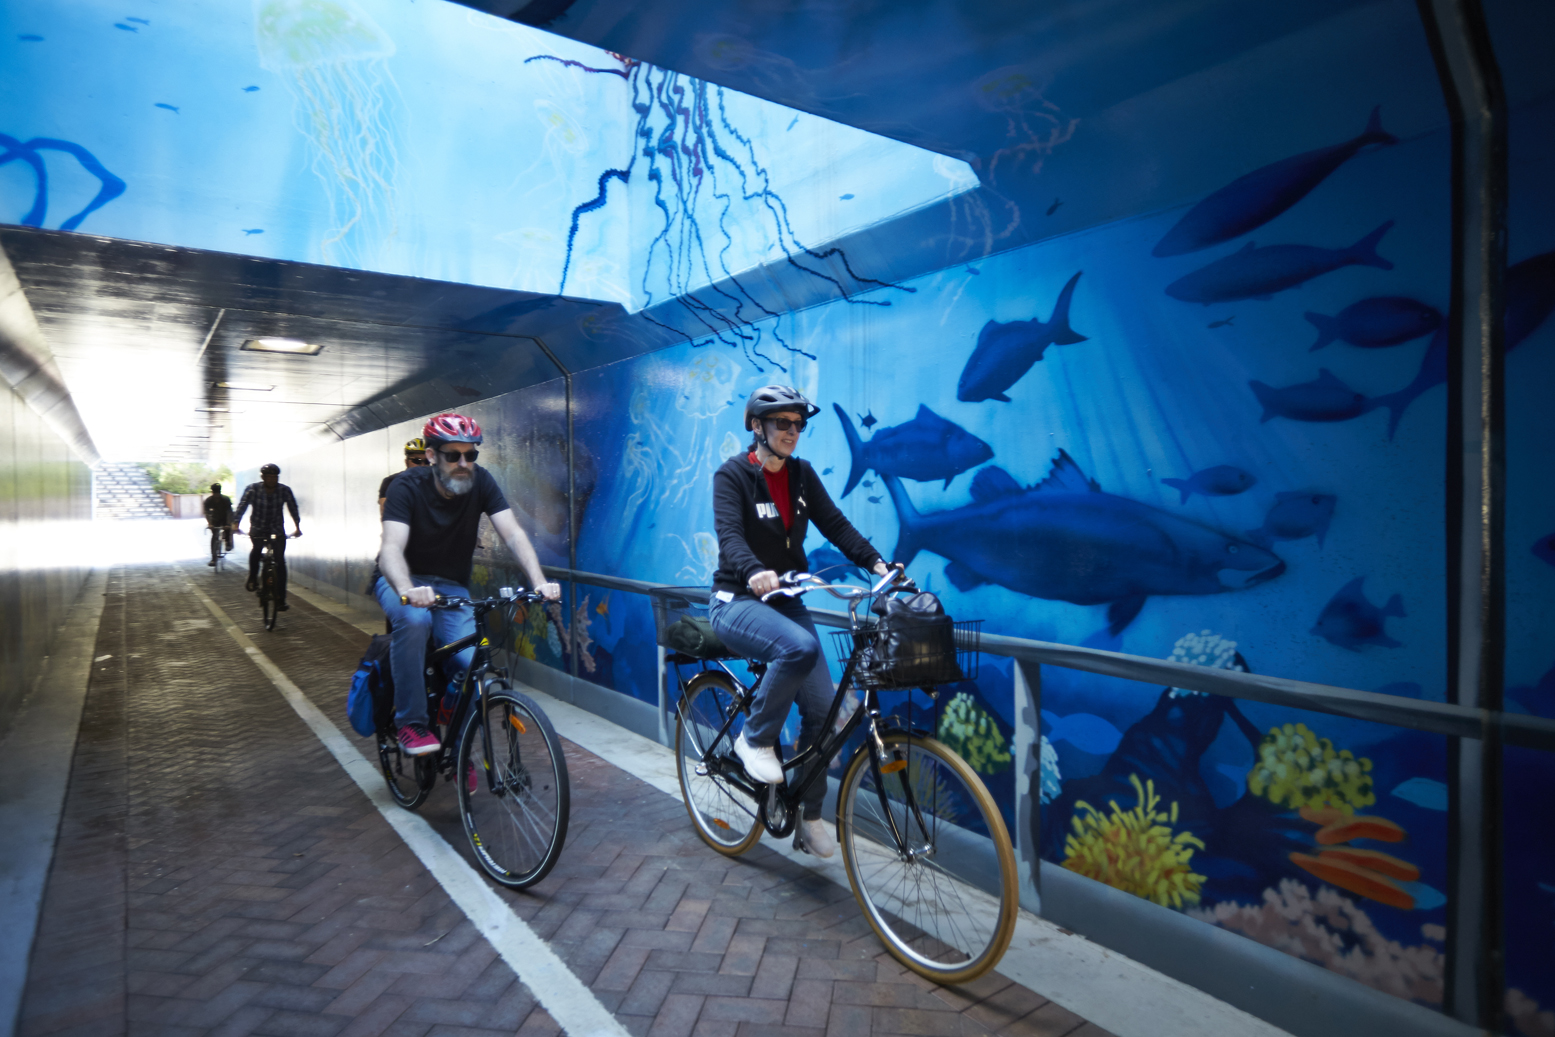 Bike riders in Surrey Rd Underpass